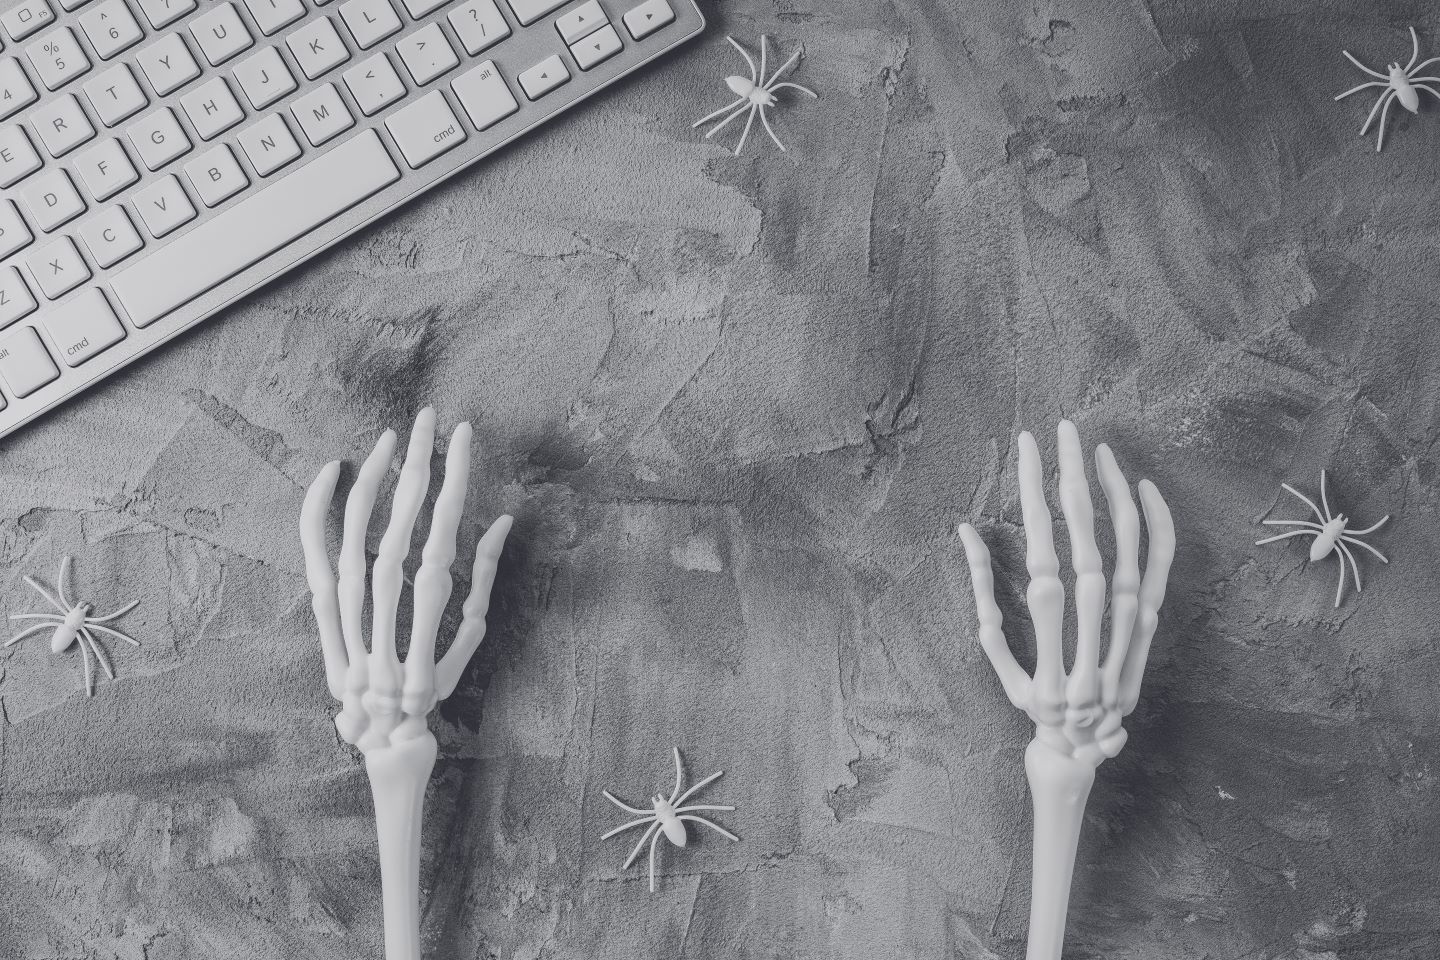 Skeleton hands at a computer keyboard